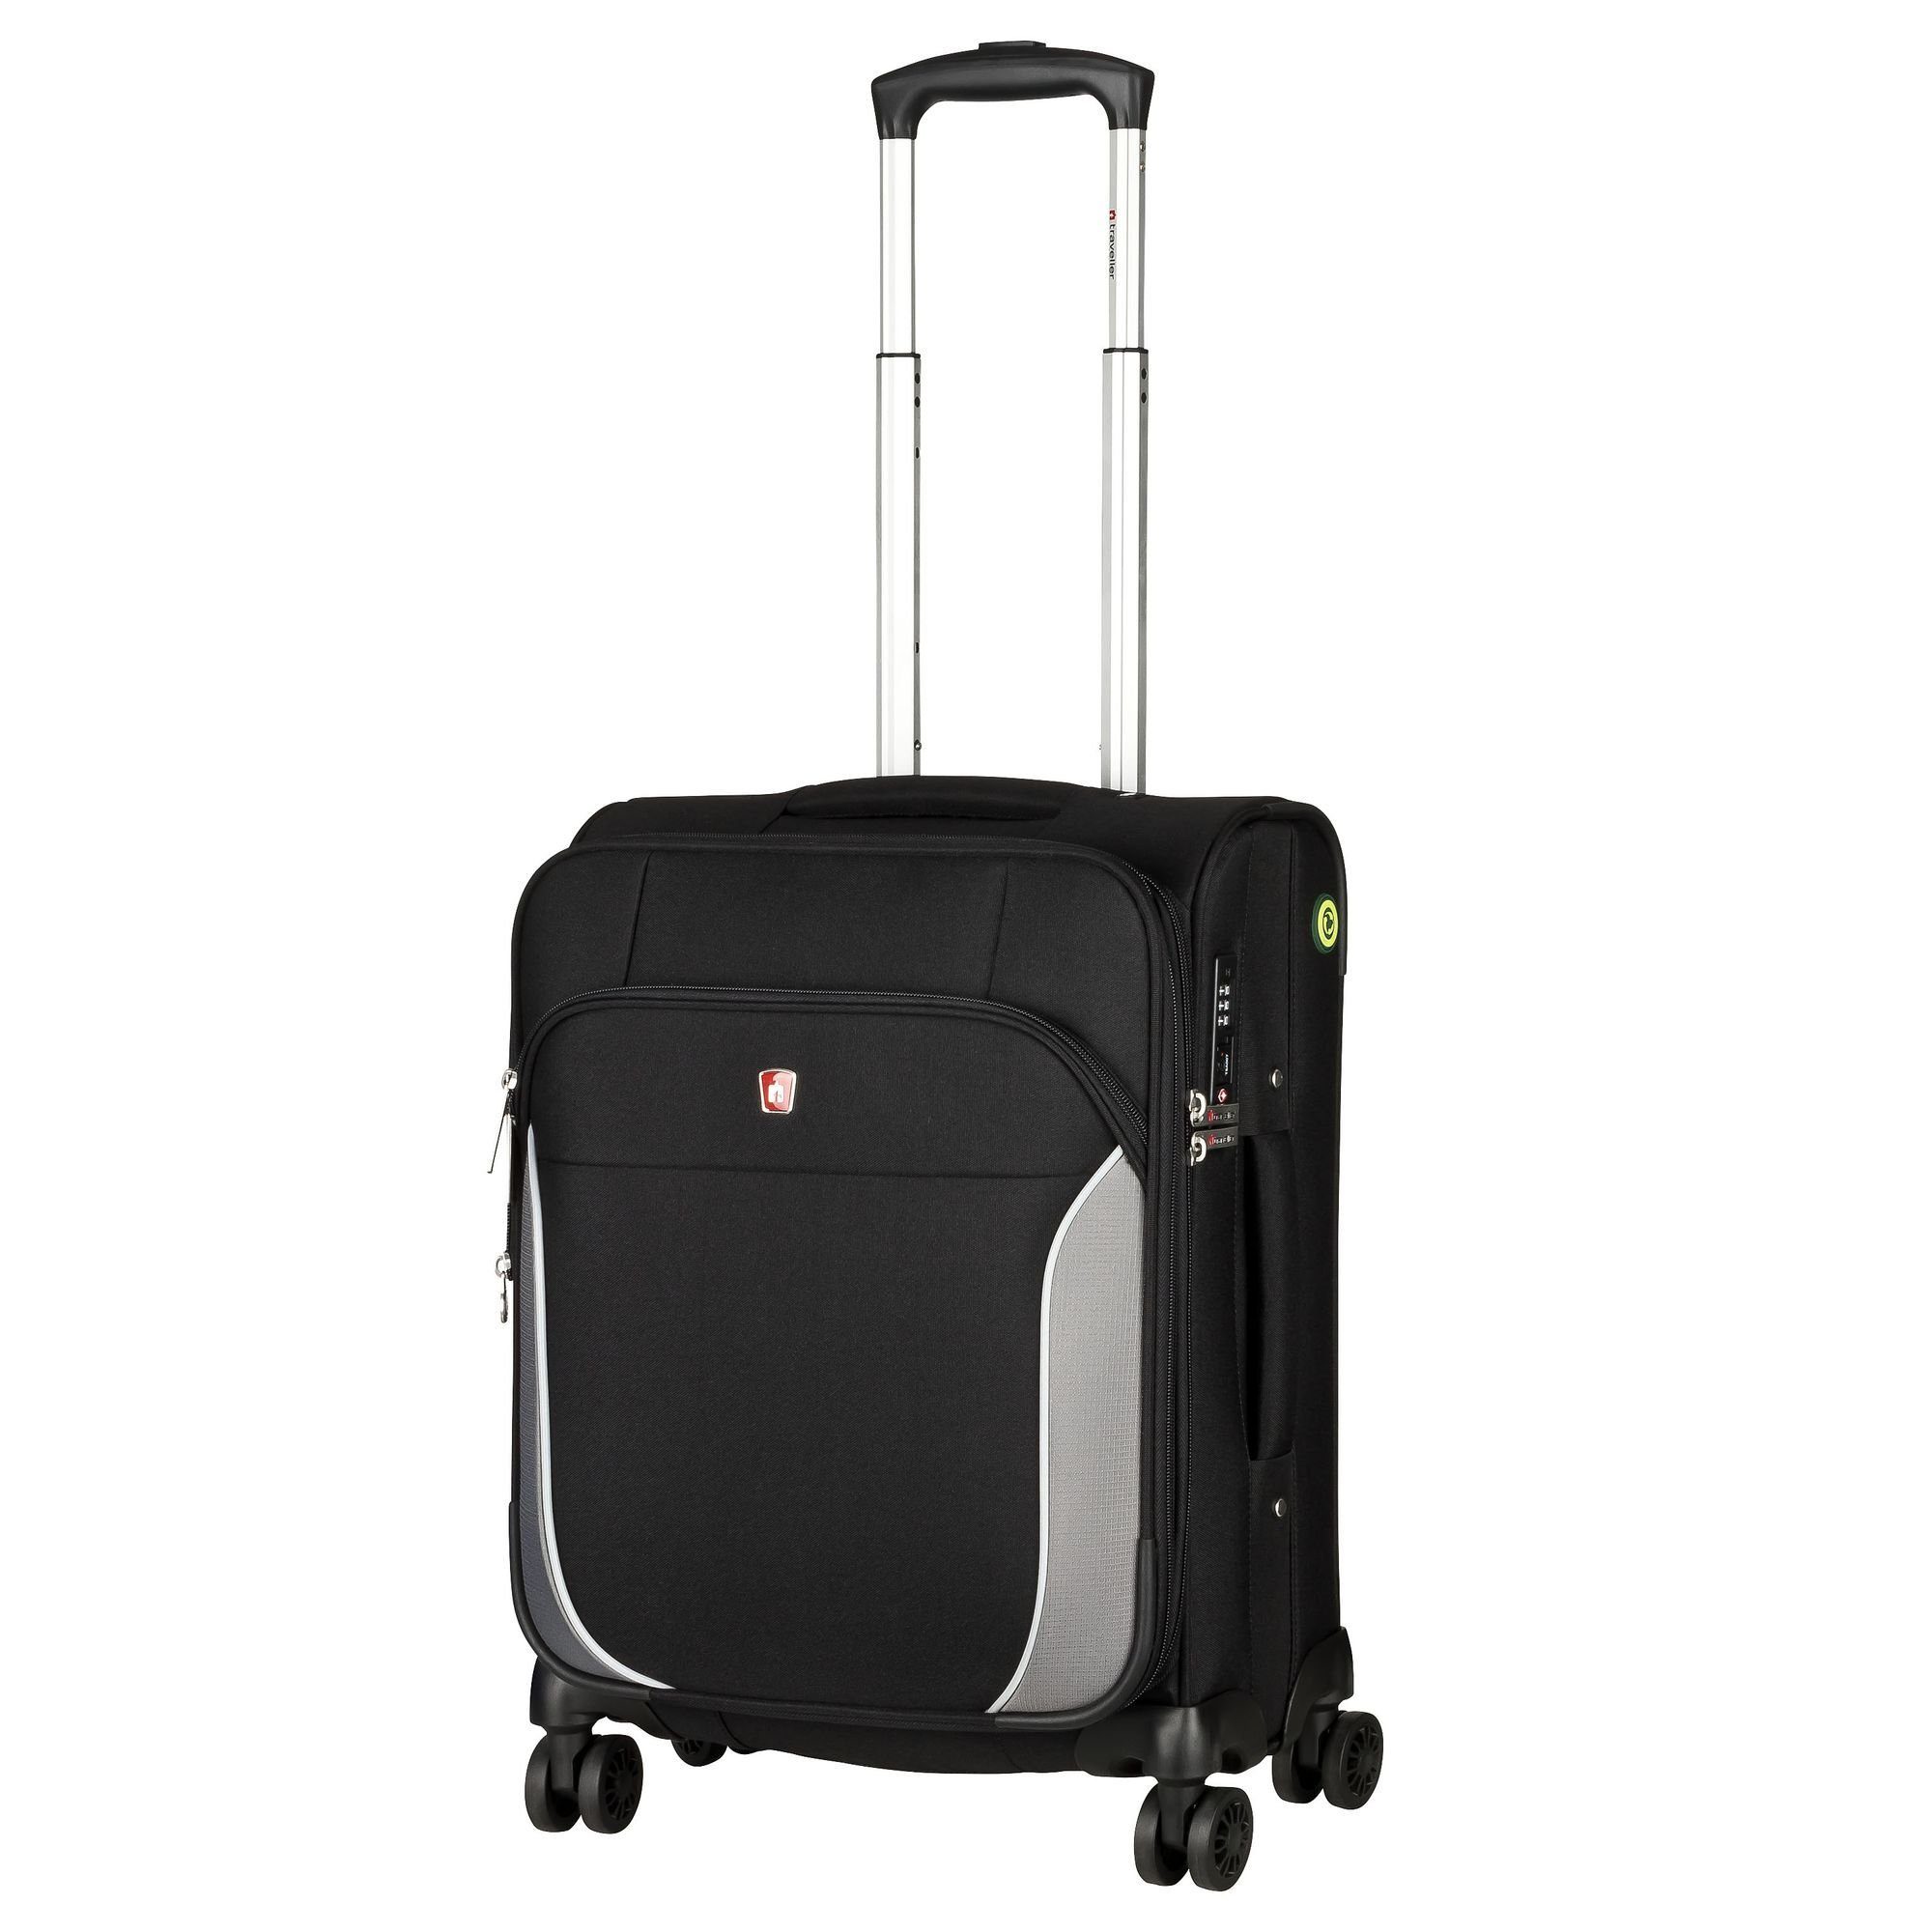 Hardcase Koffer online kaufen » Hardcase Reisekoffer